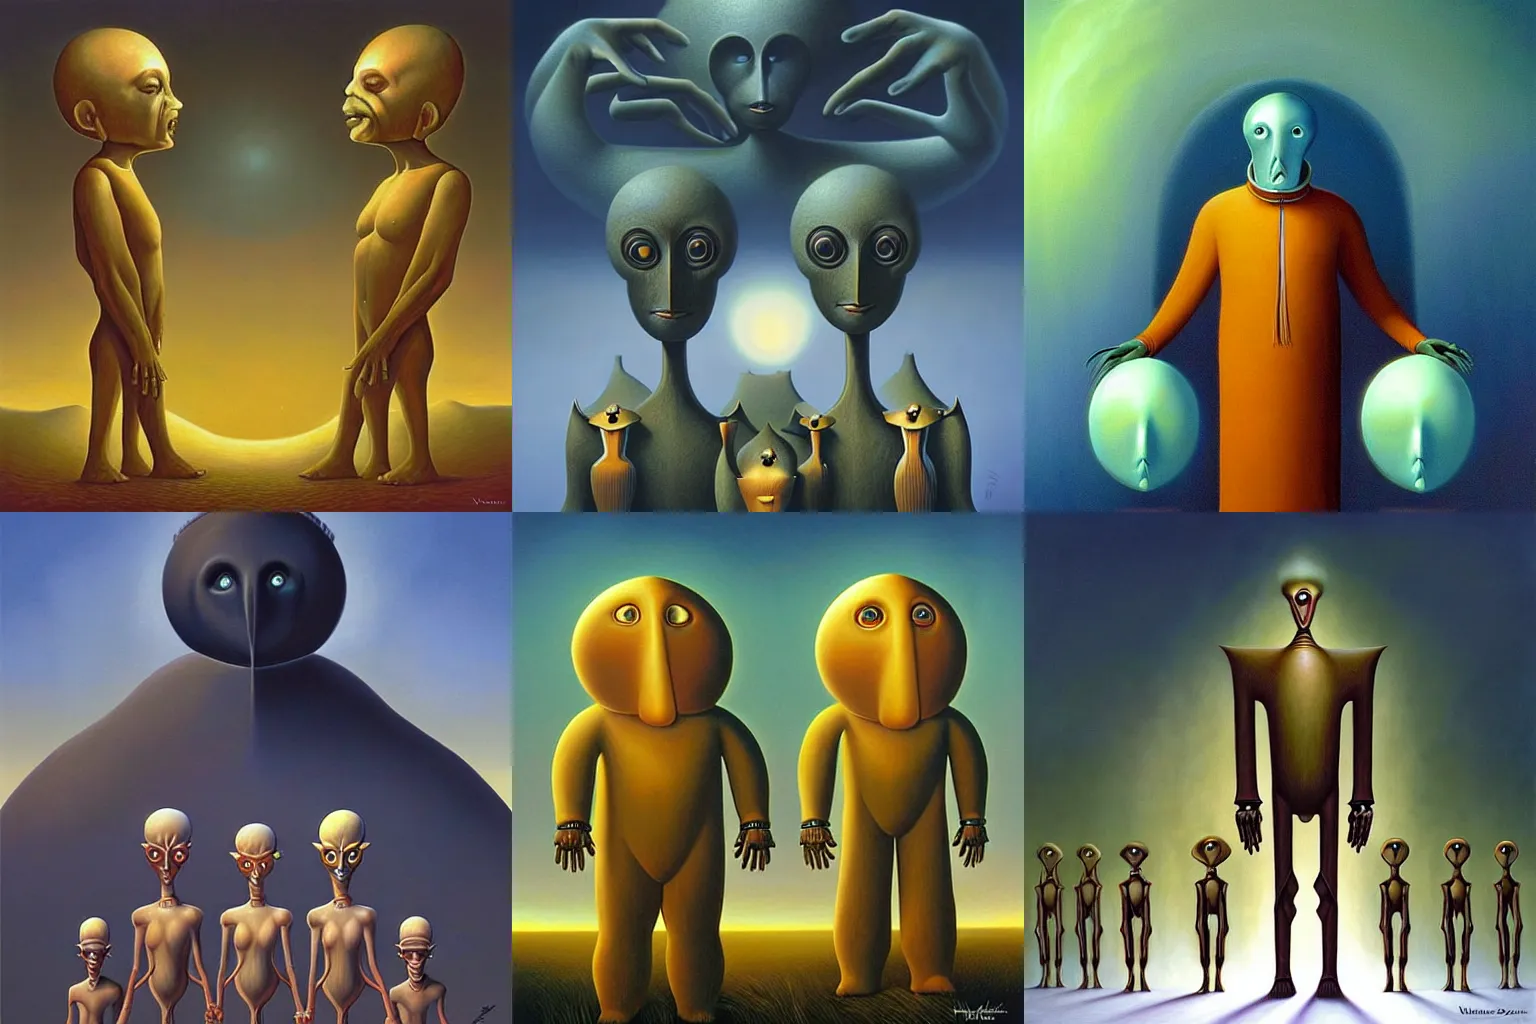 Prompt: humanoid entities by vladimir kush